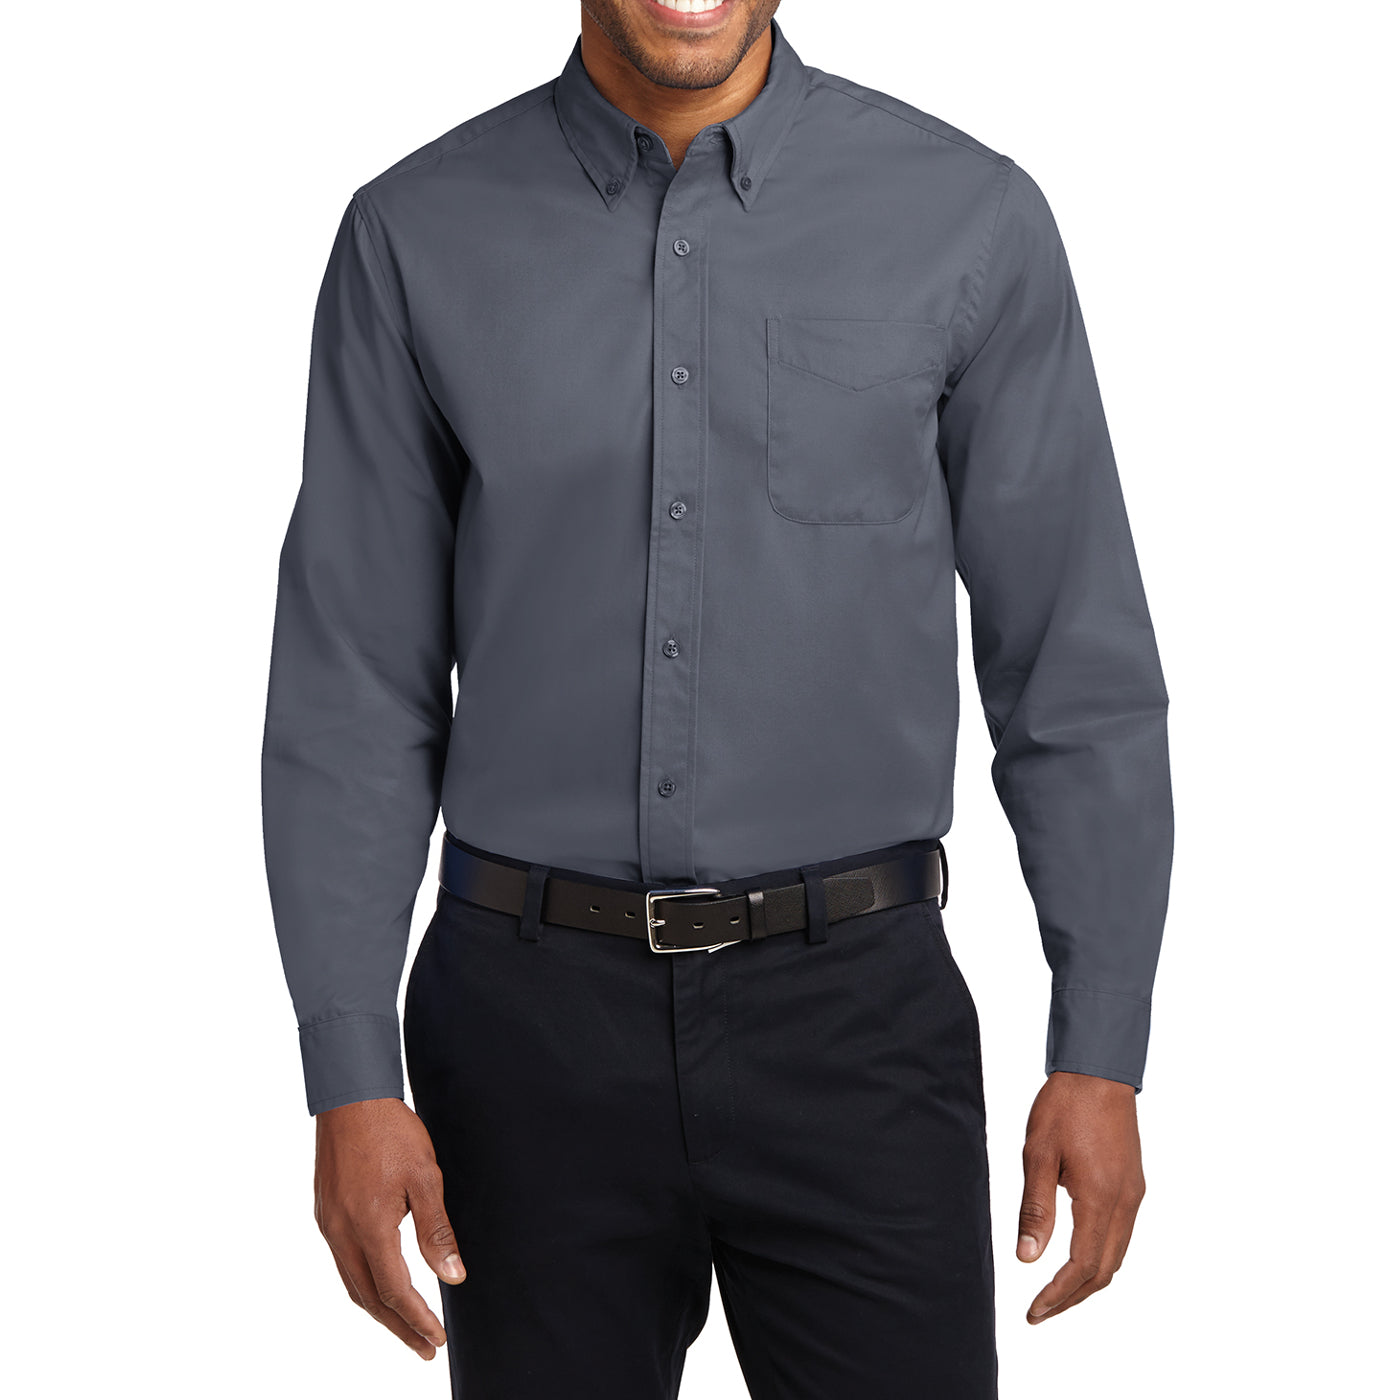 Men's Long Sleeve Easy Care Shirt - Steel Grey/ Light Stone - Front